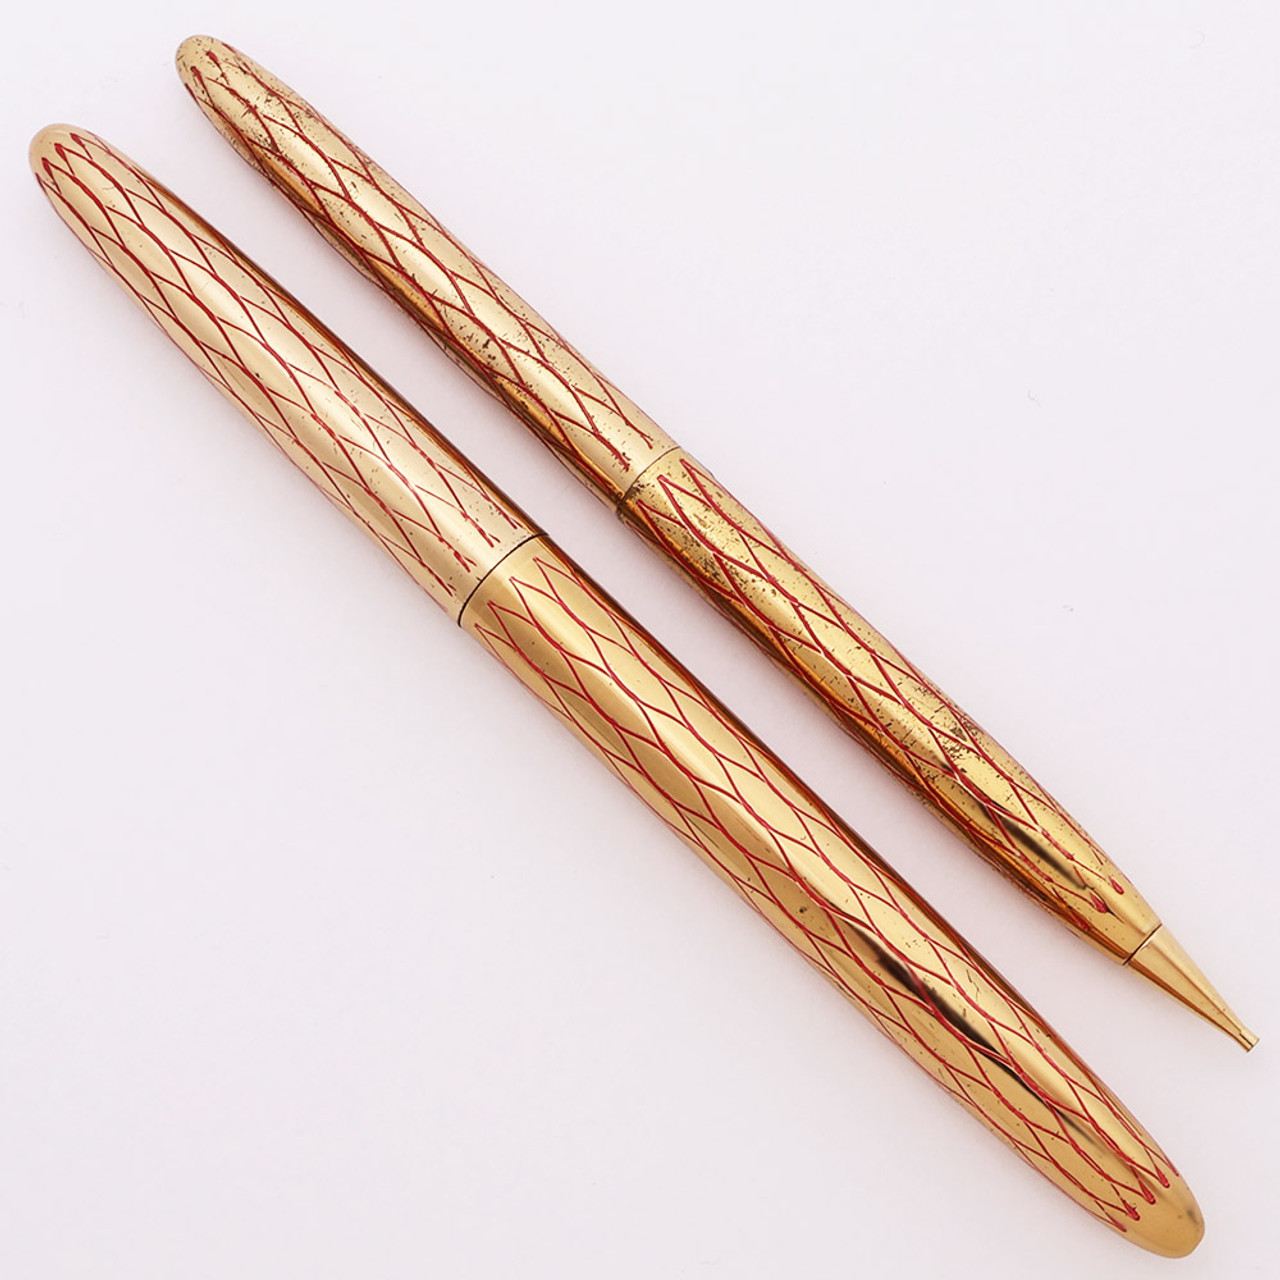 Lady Sheaffer IX Skripsert Fountain Pen & Pencil Set (1960s) - Gold Red Tulle, Medium Nib (Excellent, Works Well)